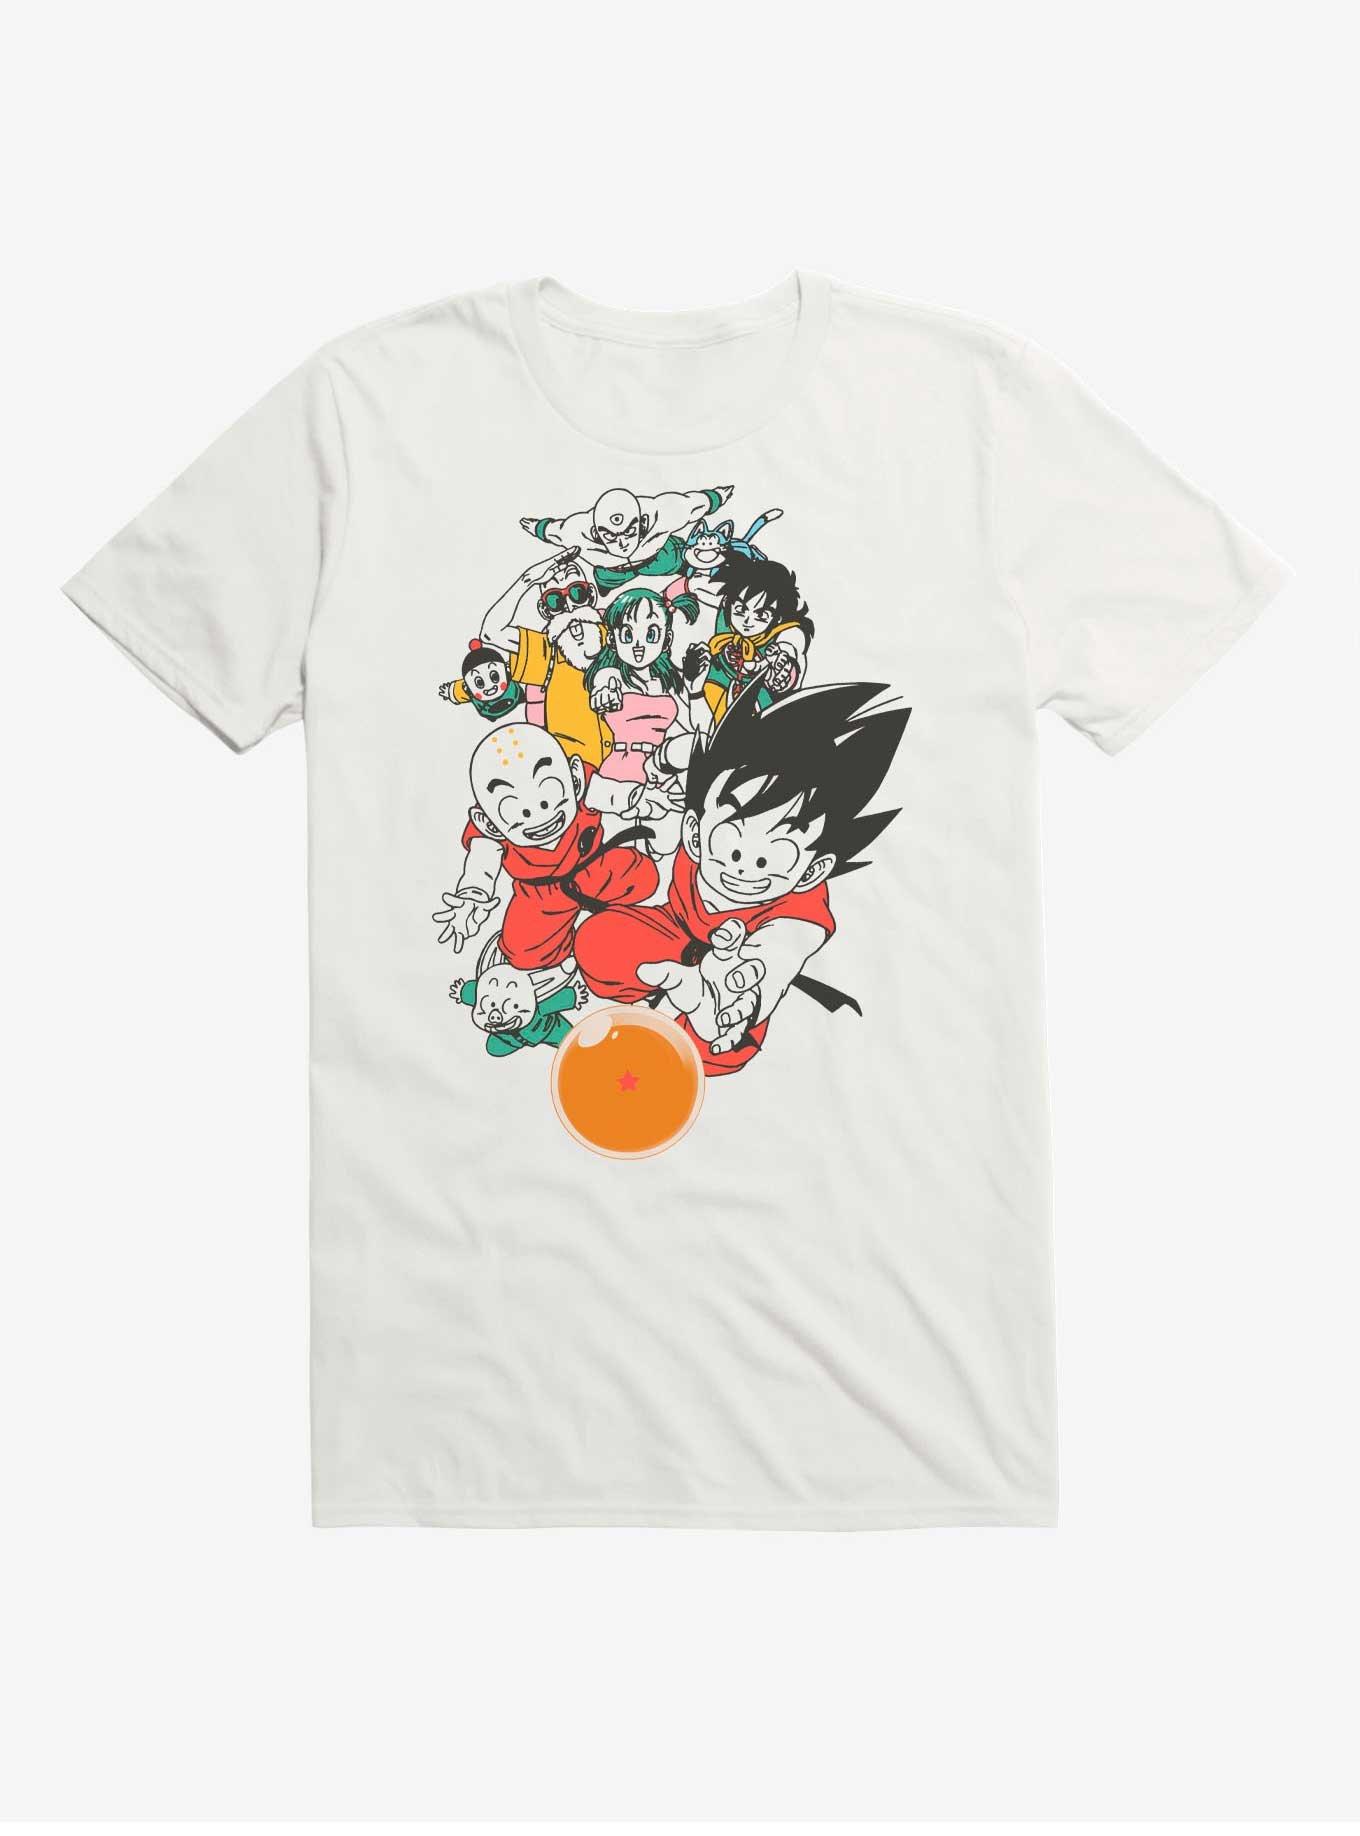 Dragon ball sport football Graphic T-Shirt by Maxpgd18